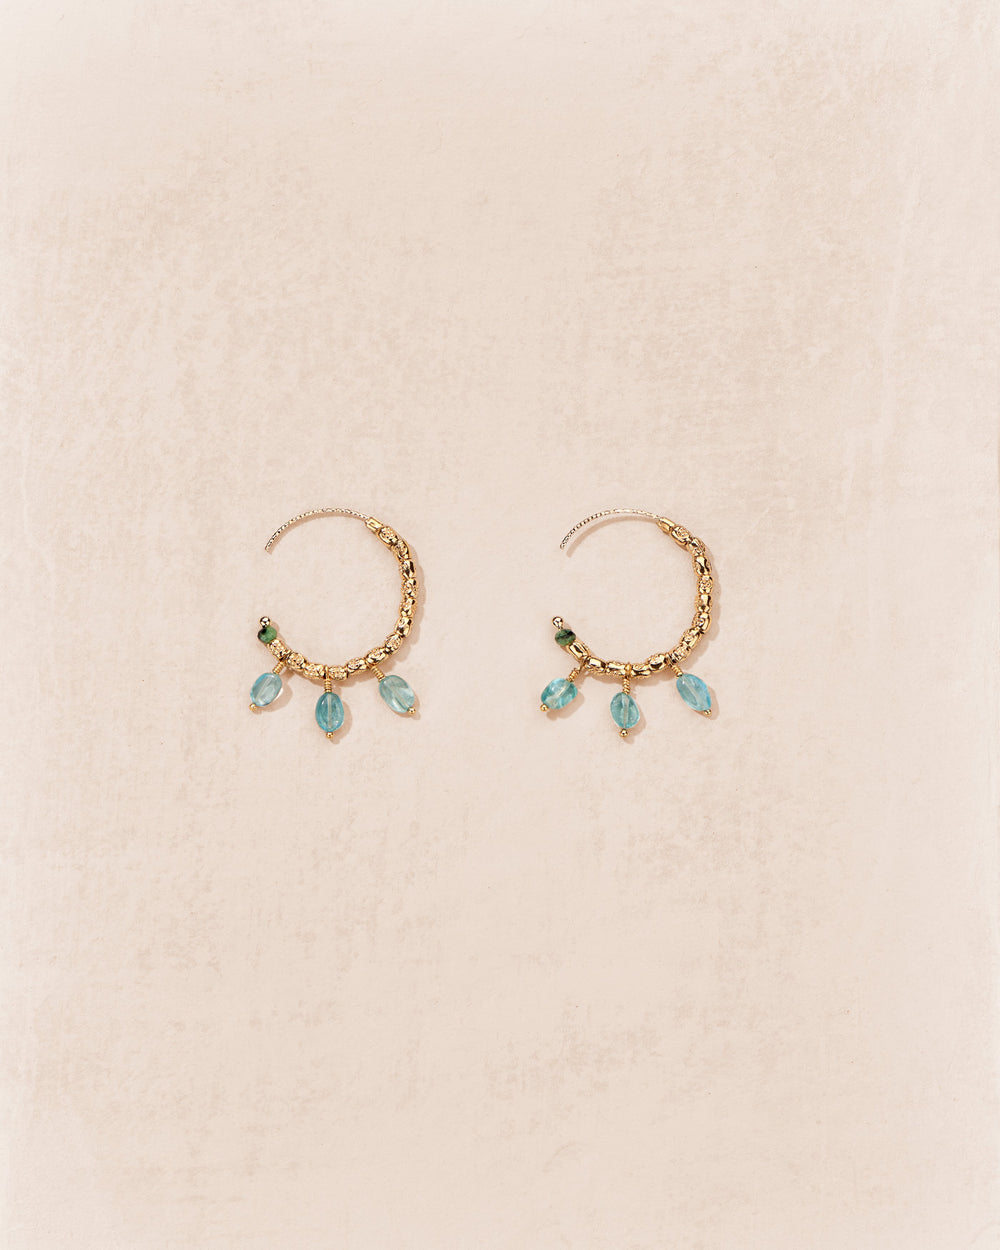 Apatan earrings